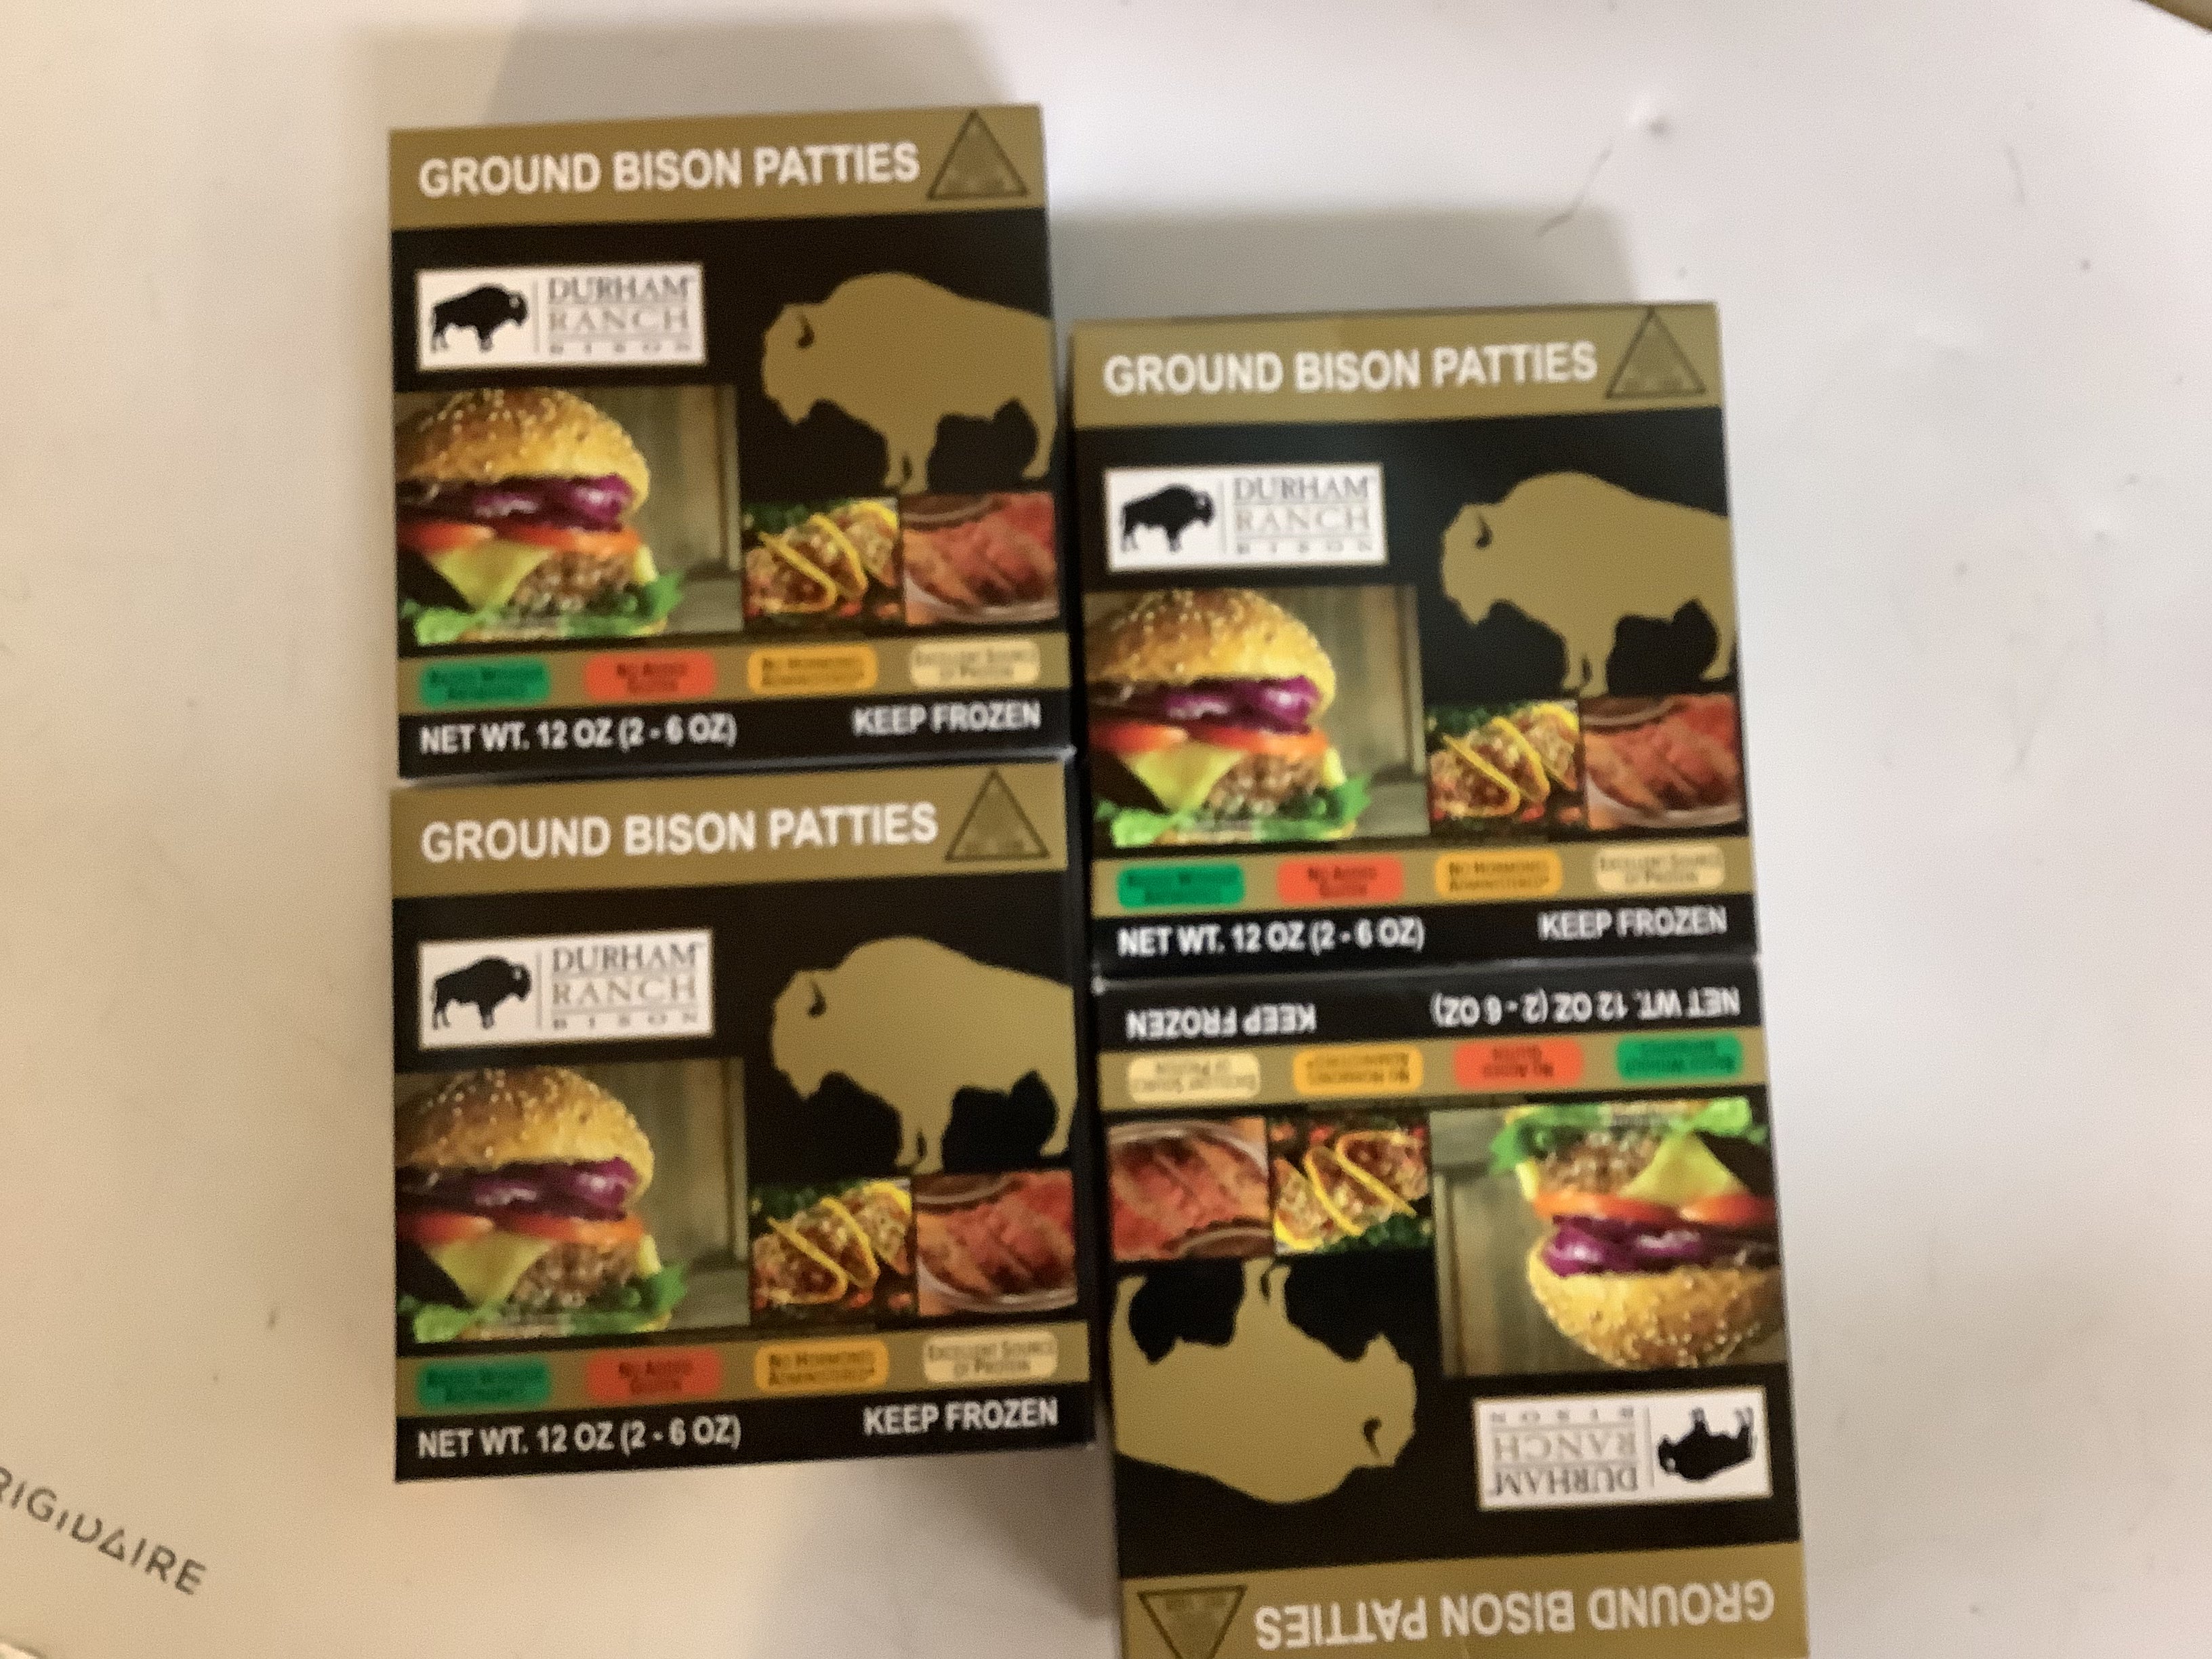 Sierra Meats - Ground Bison Patties - 6 oz two pack